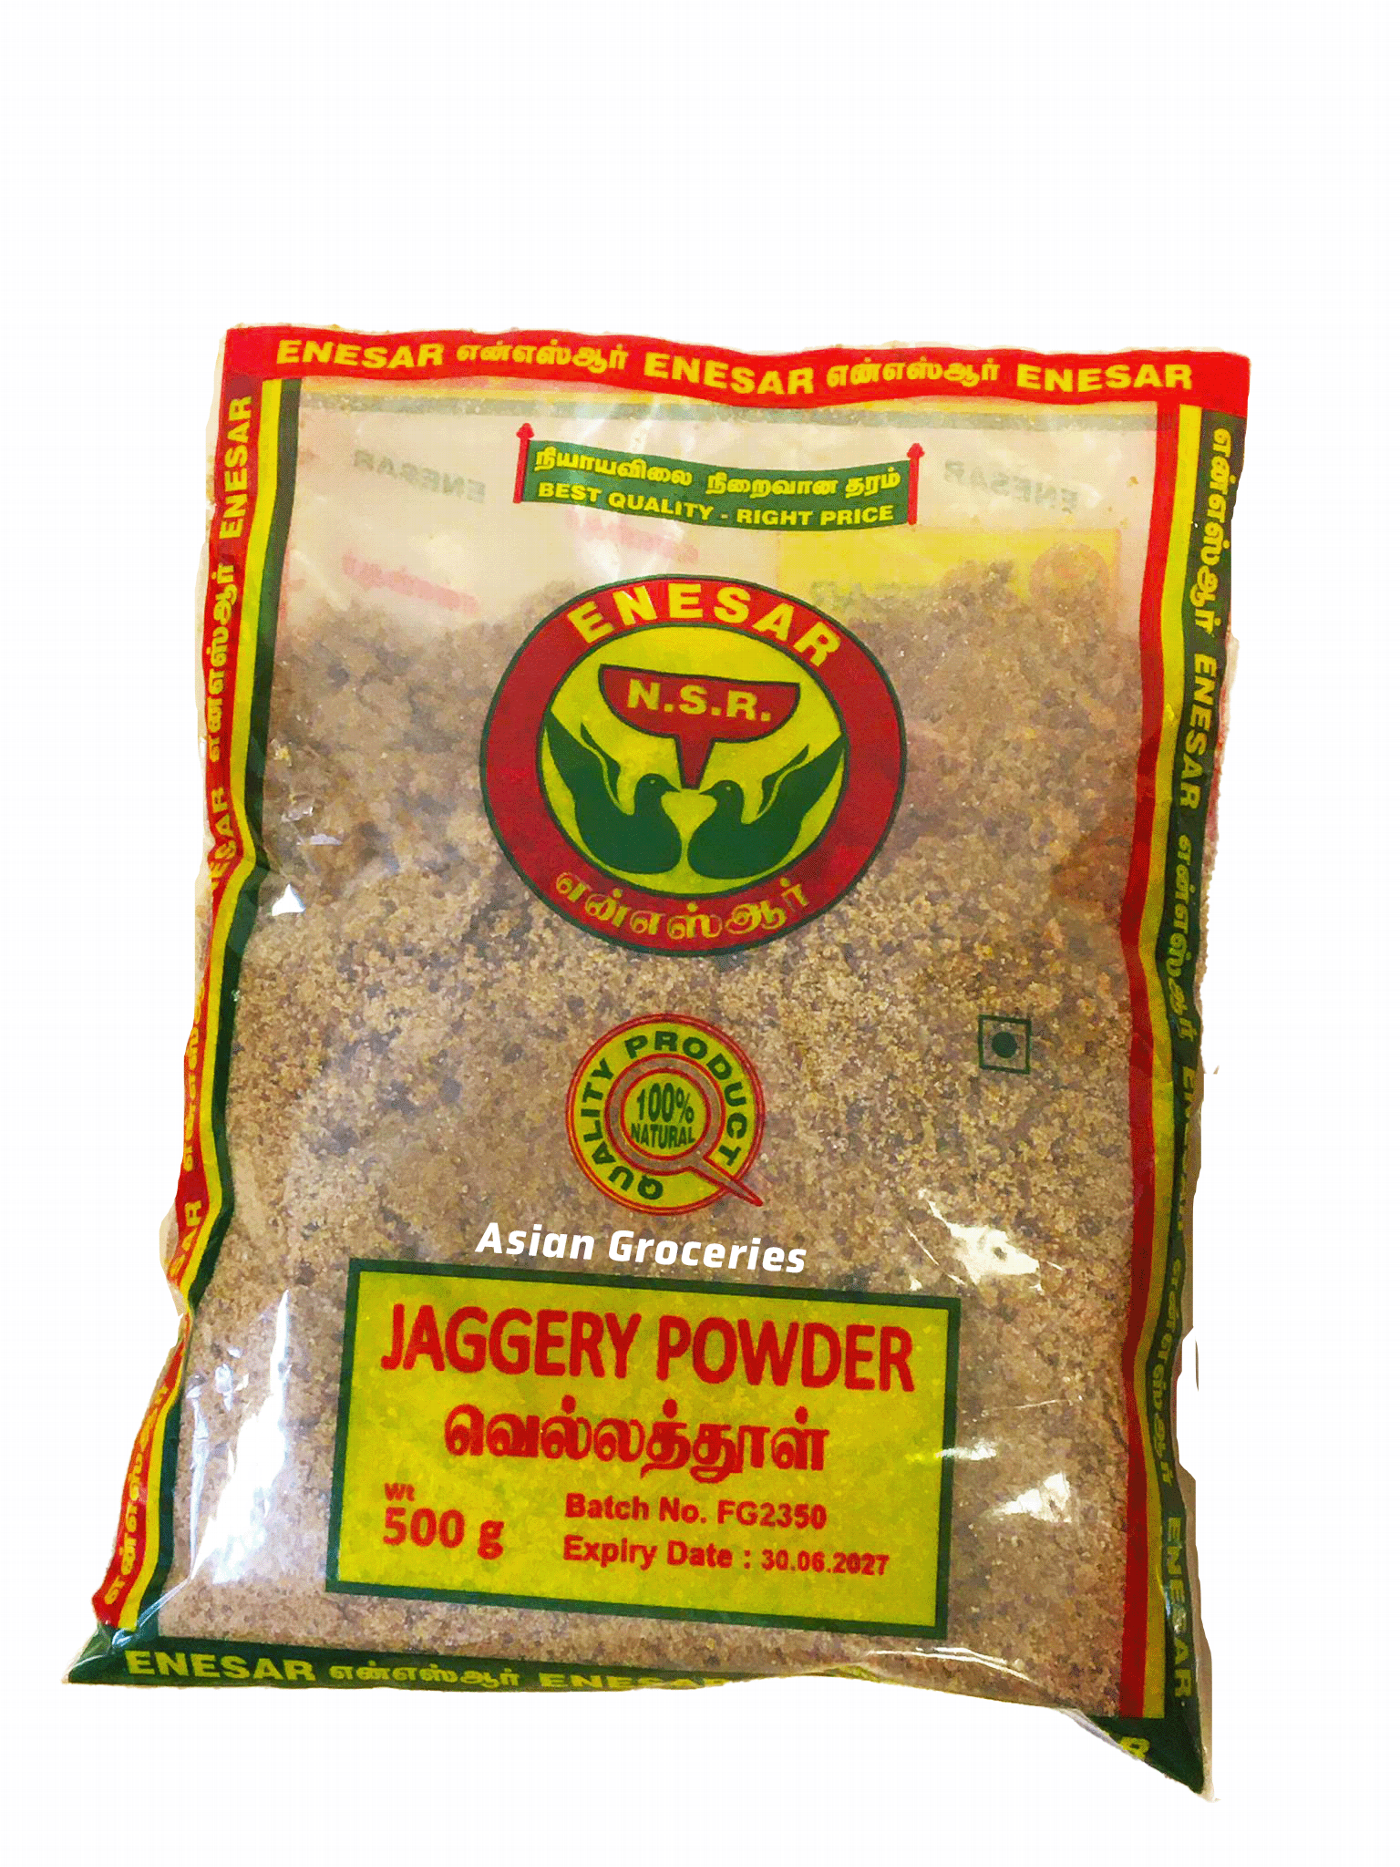 NSR jaggery powder 500g